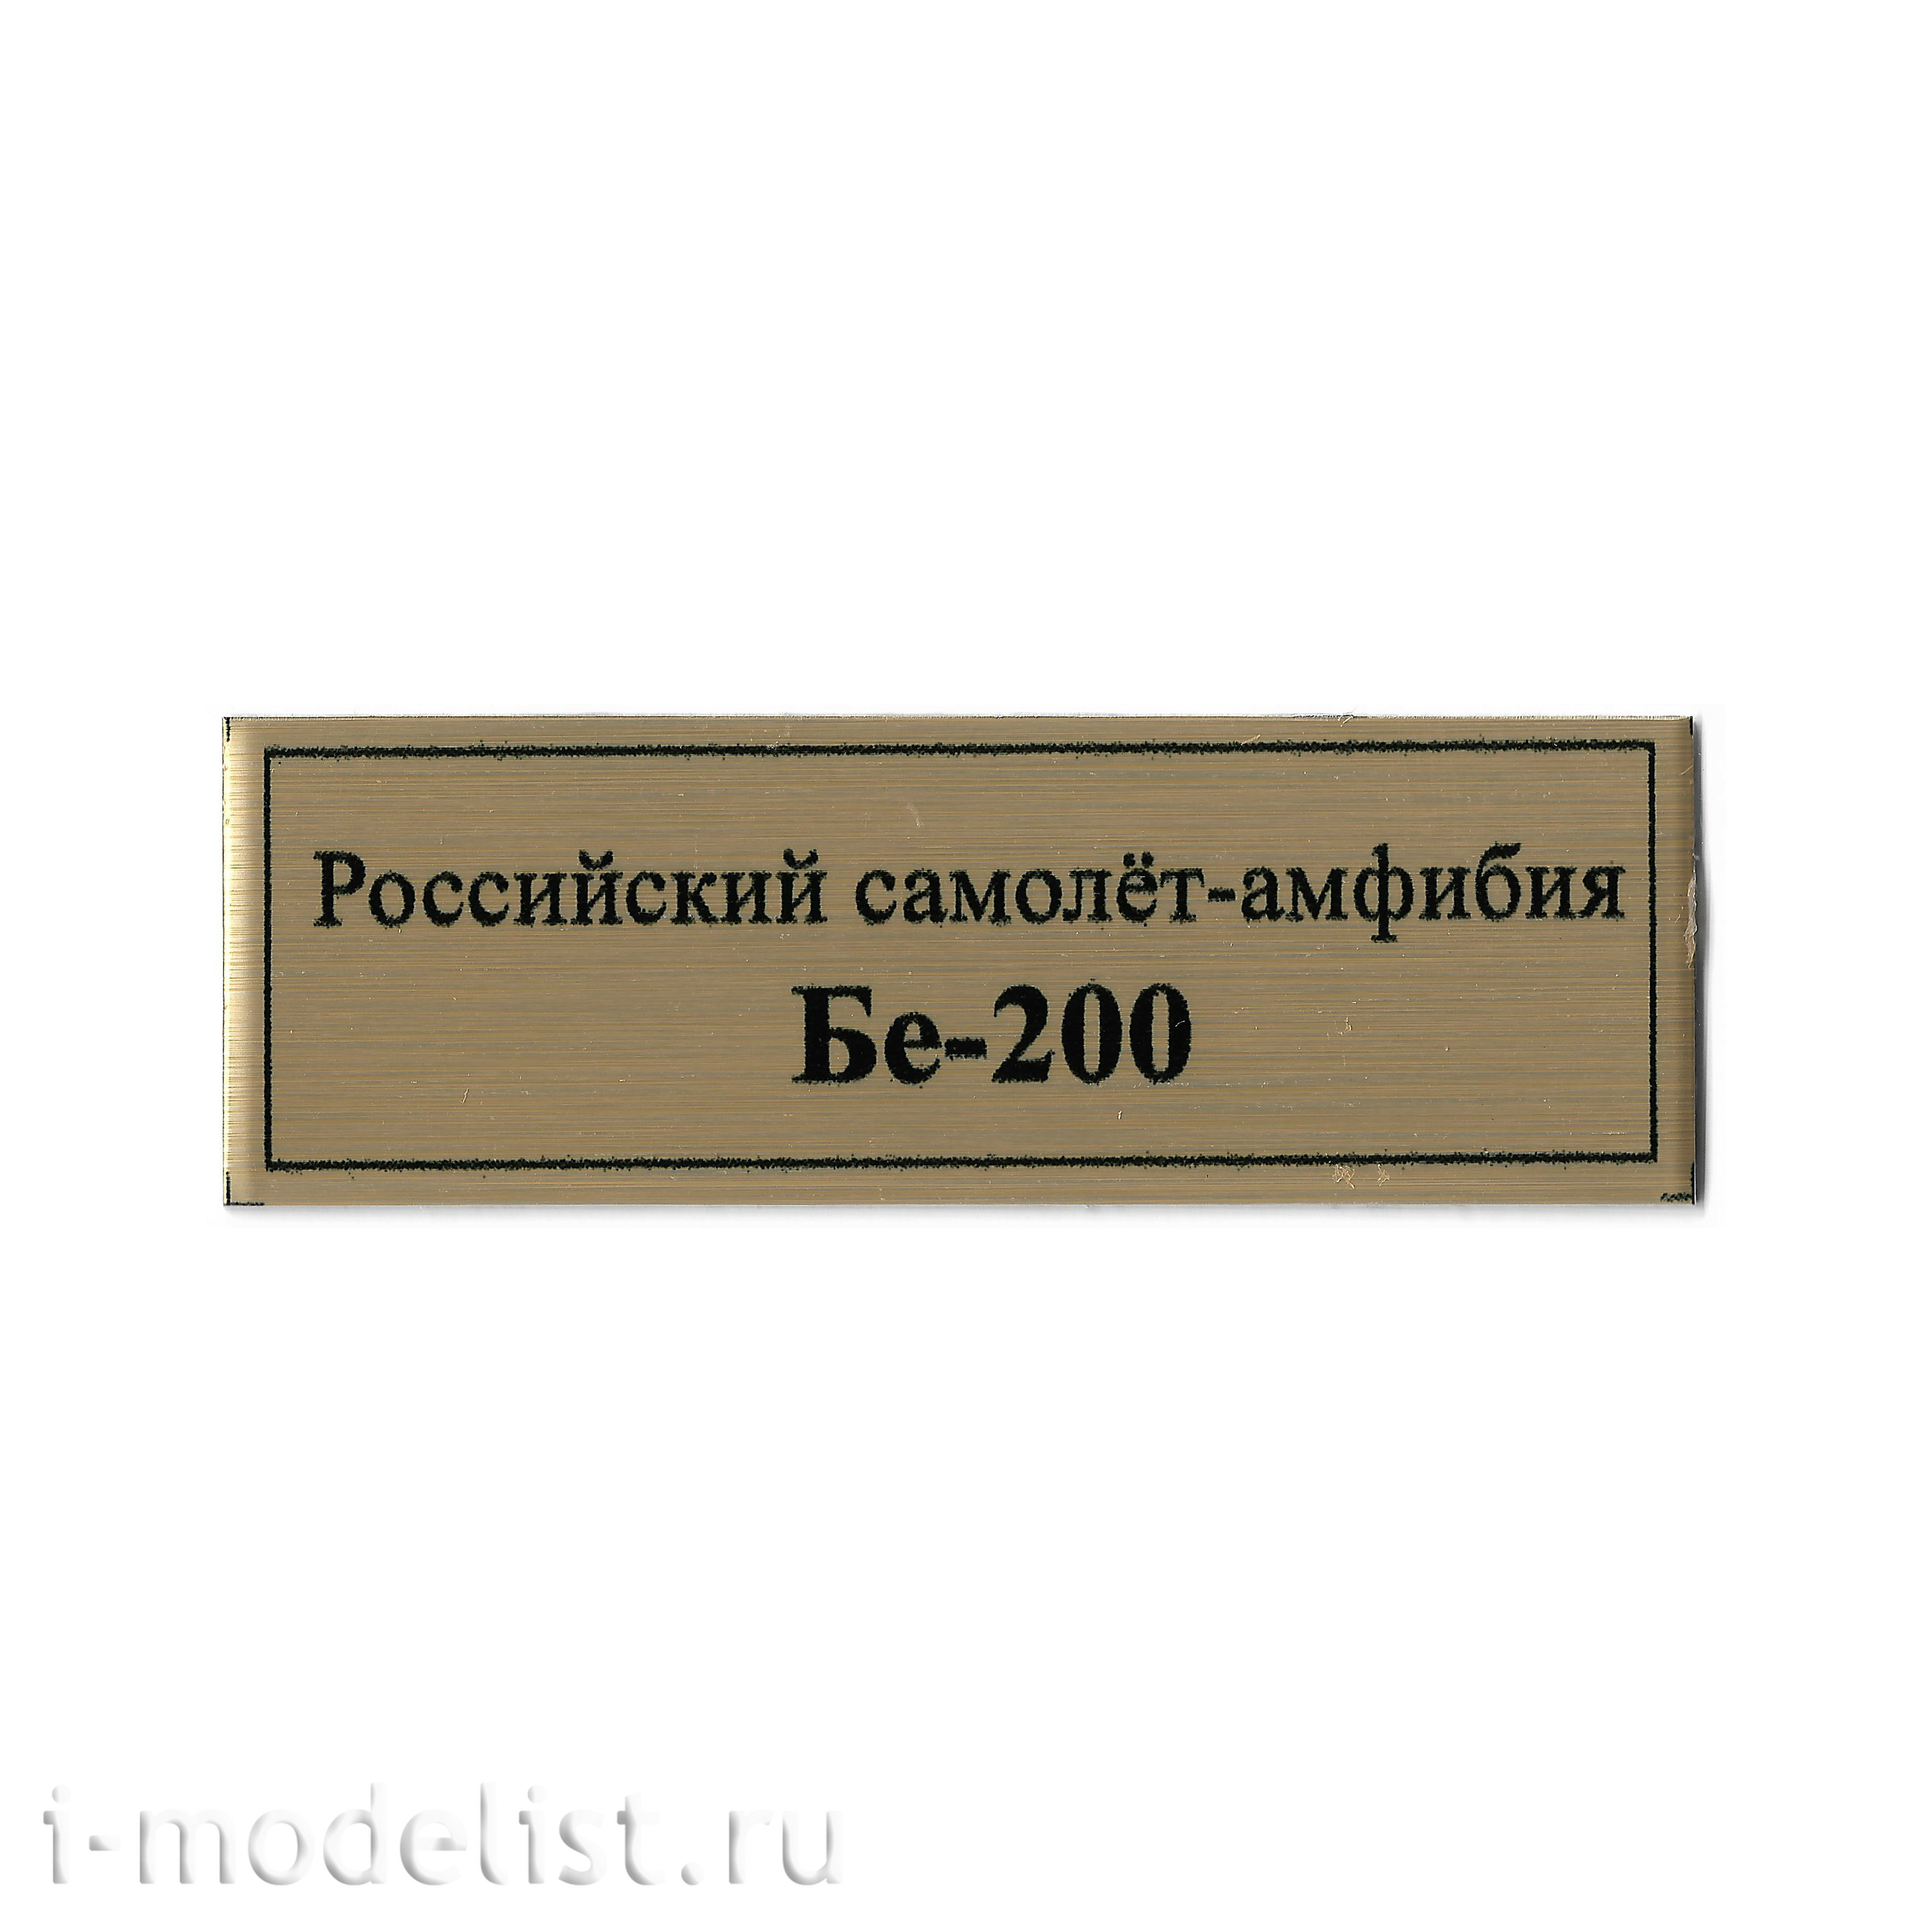 Т344 Plate Табличка для Российского самолета-амфибии Бе-200, 60х20 мм, цвет золото